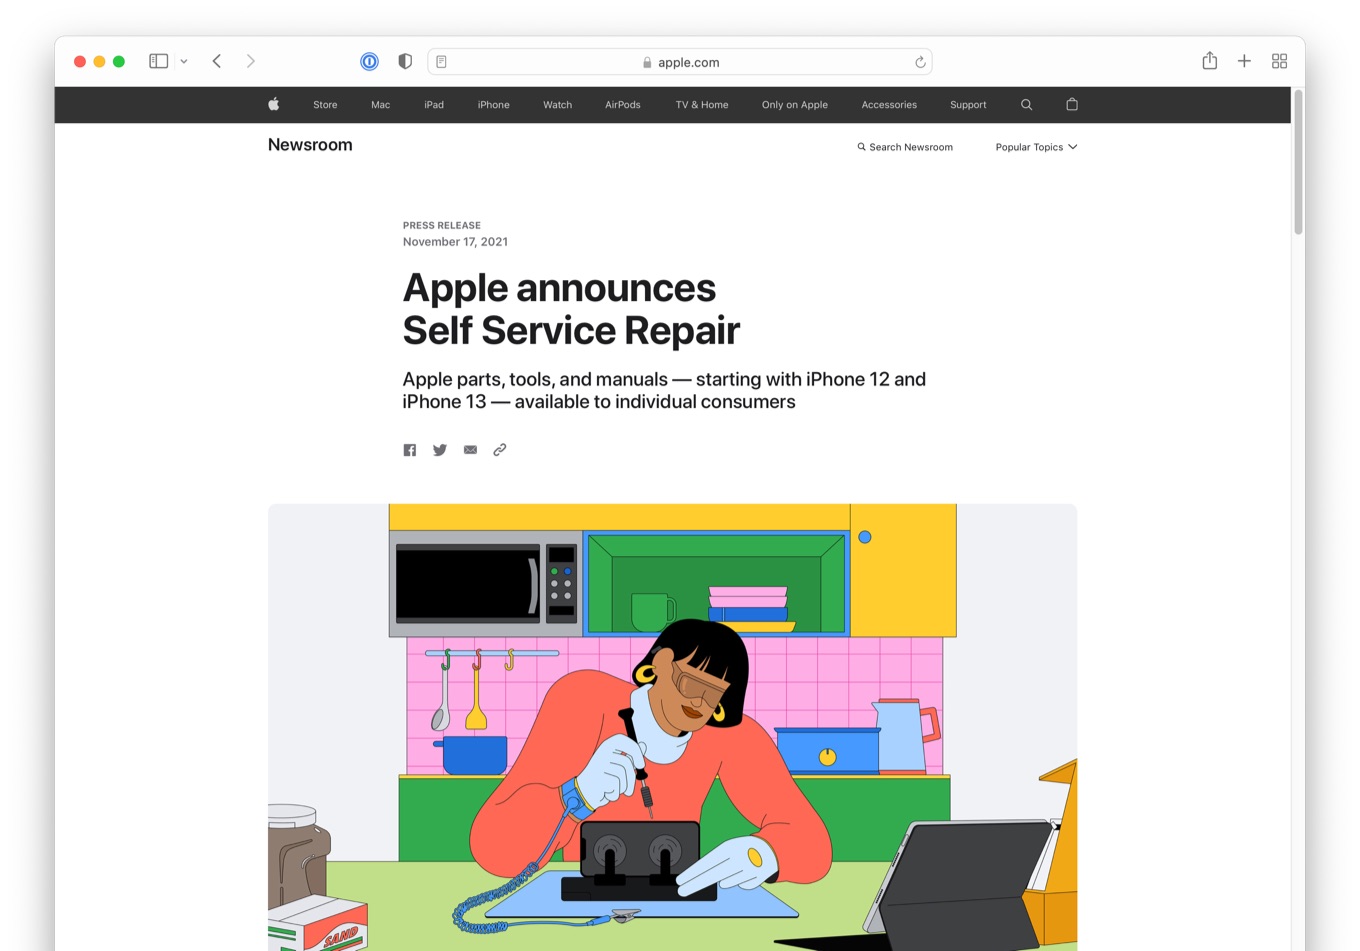 Apple today announced Self Service Repair